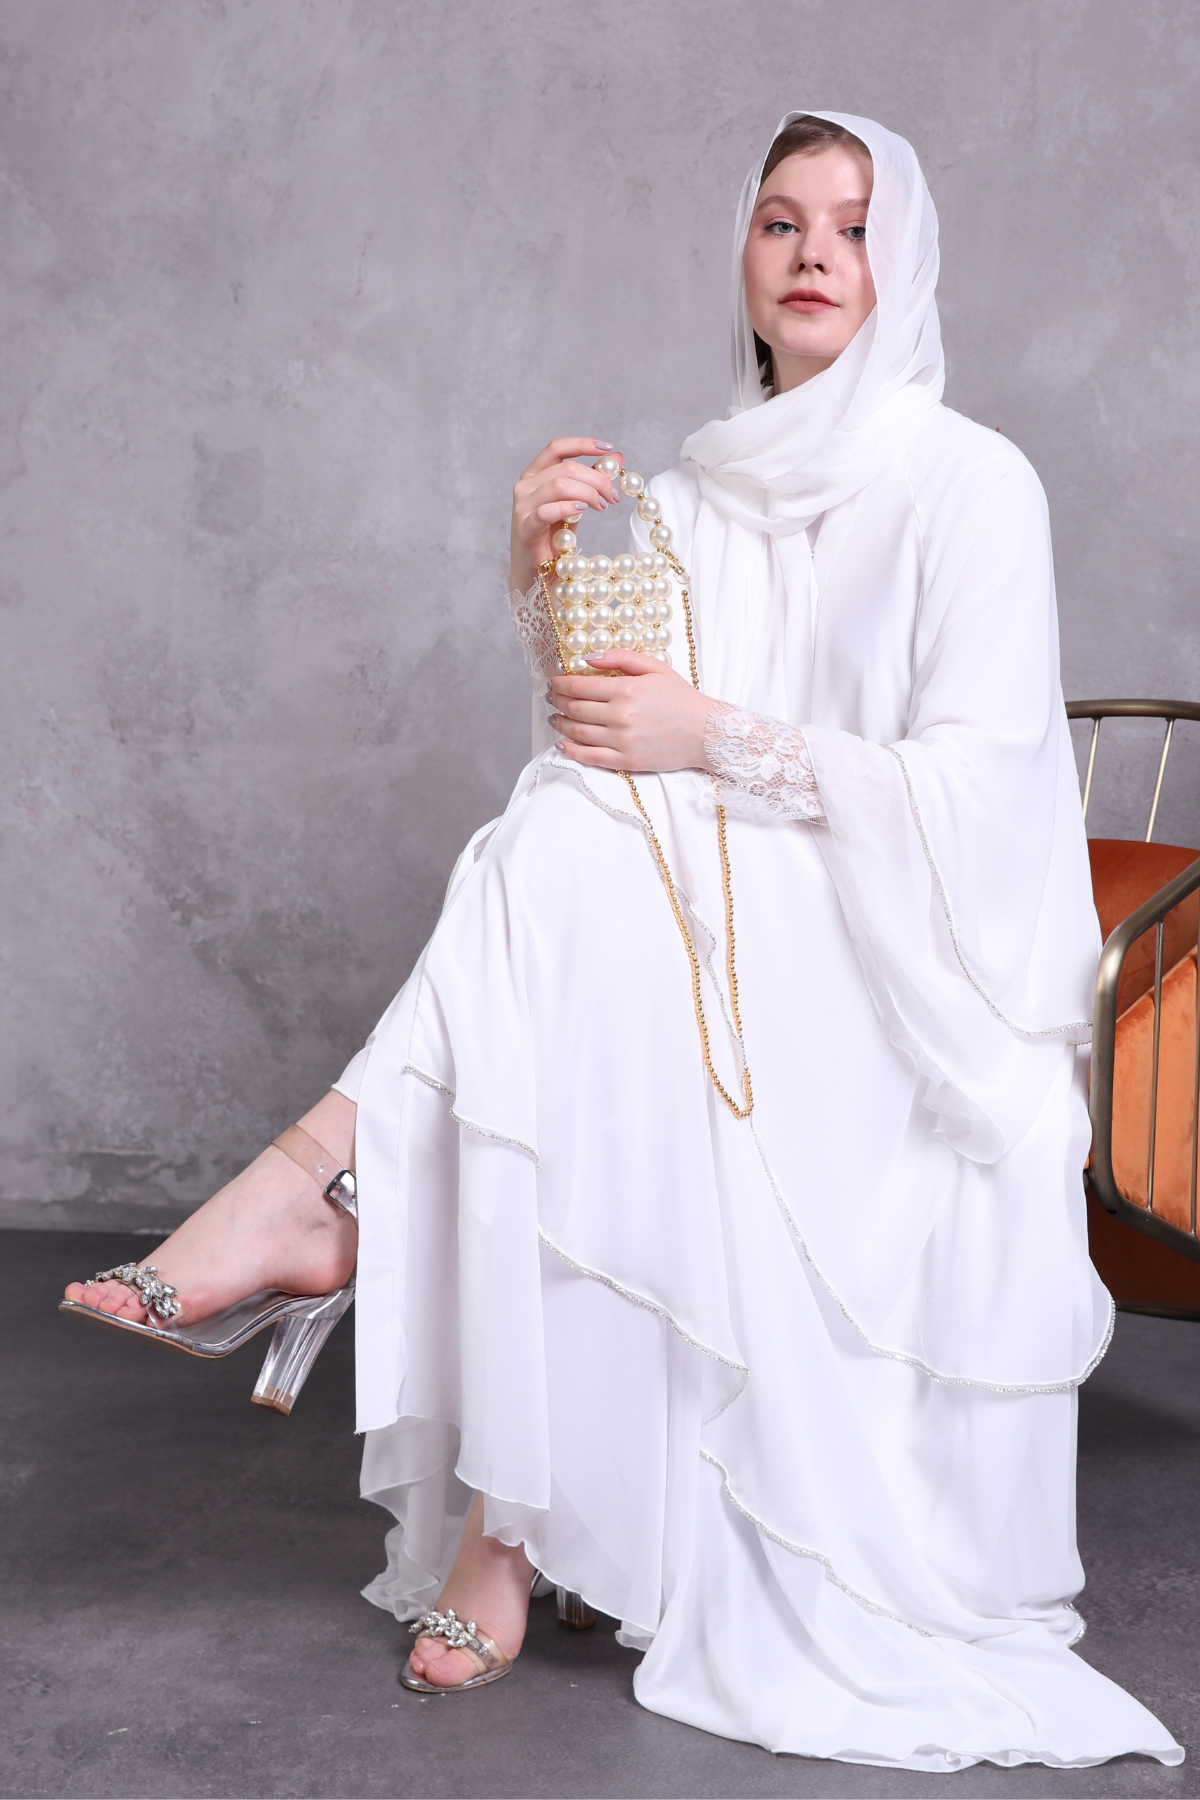 Snowflake Elegance Chiffon Abaya: A Three-Layered White Beauty Adorned with Swarovski